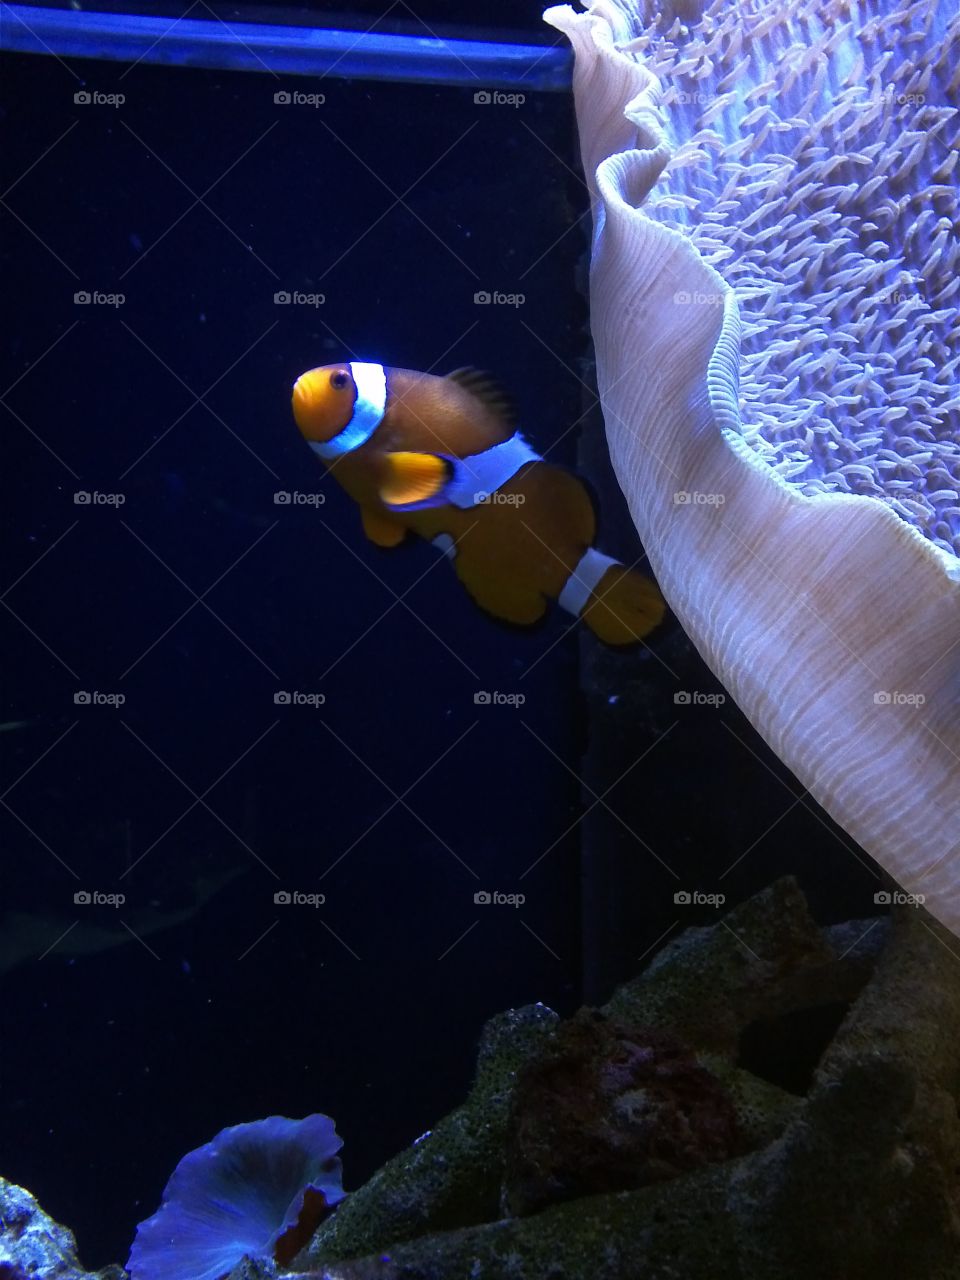 clowning clownfish. taken at Dodge city KS zoo aquarium